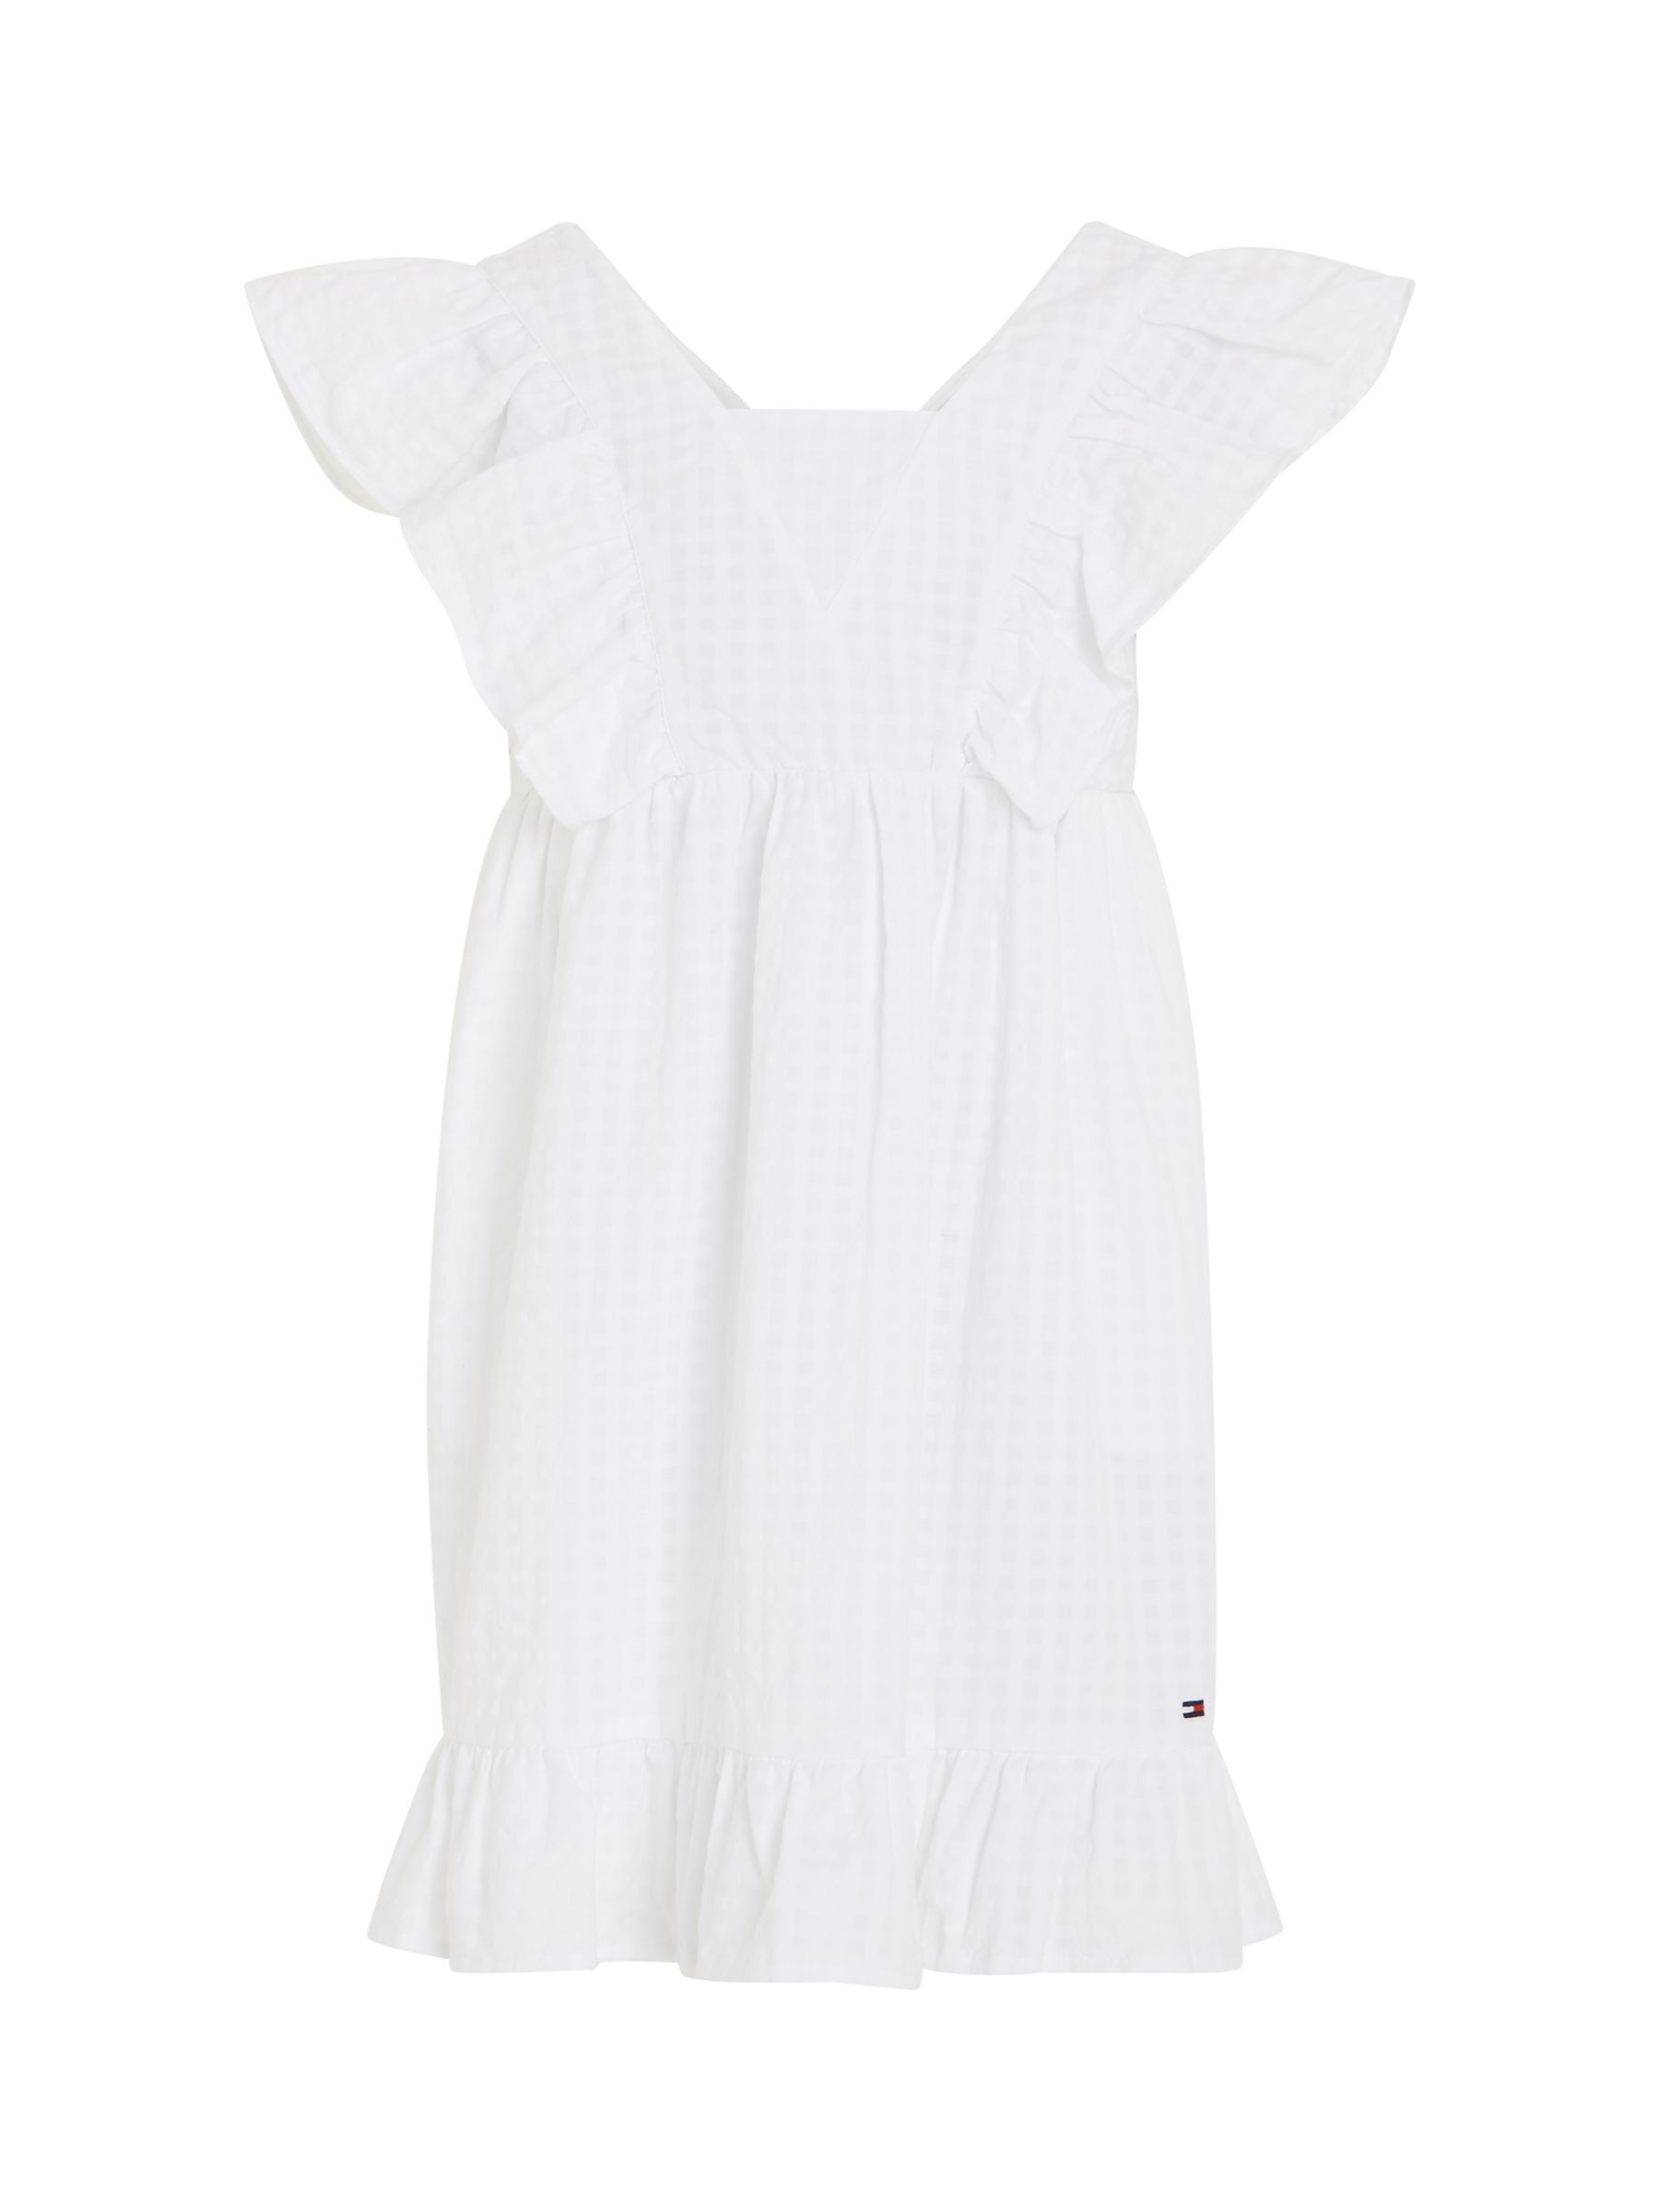 Buy Tommy Hilfiger Kids' Seersucker Gingham Texture Frill Detail Dress, White Online at johnlewis.com